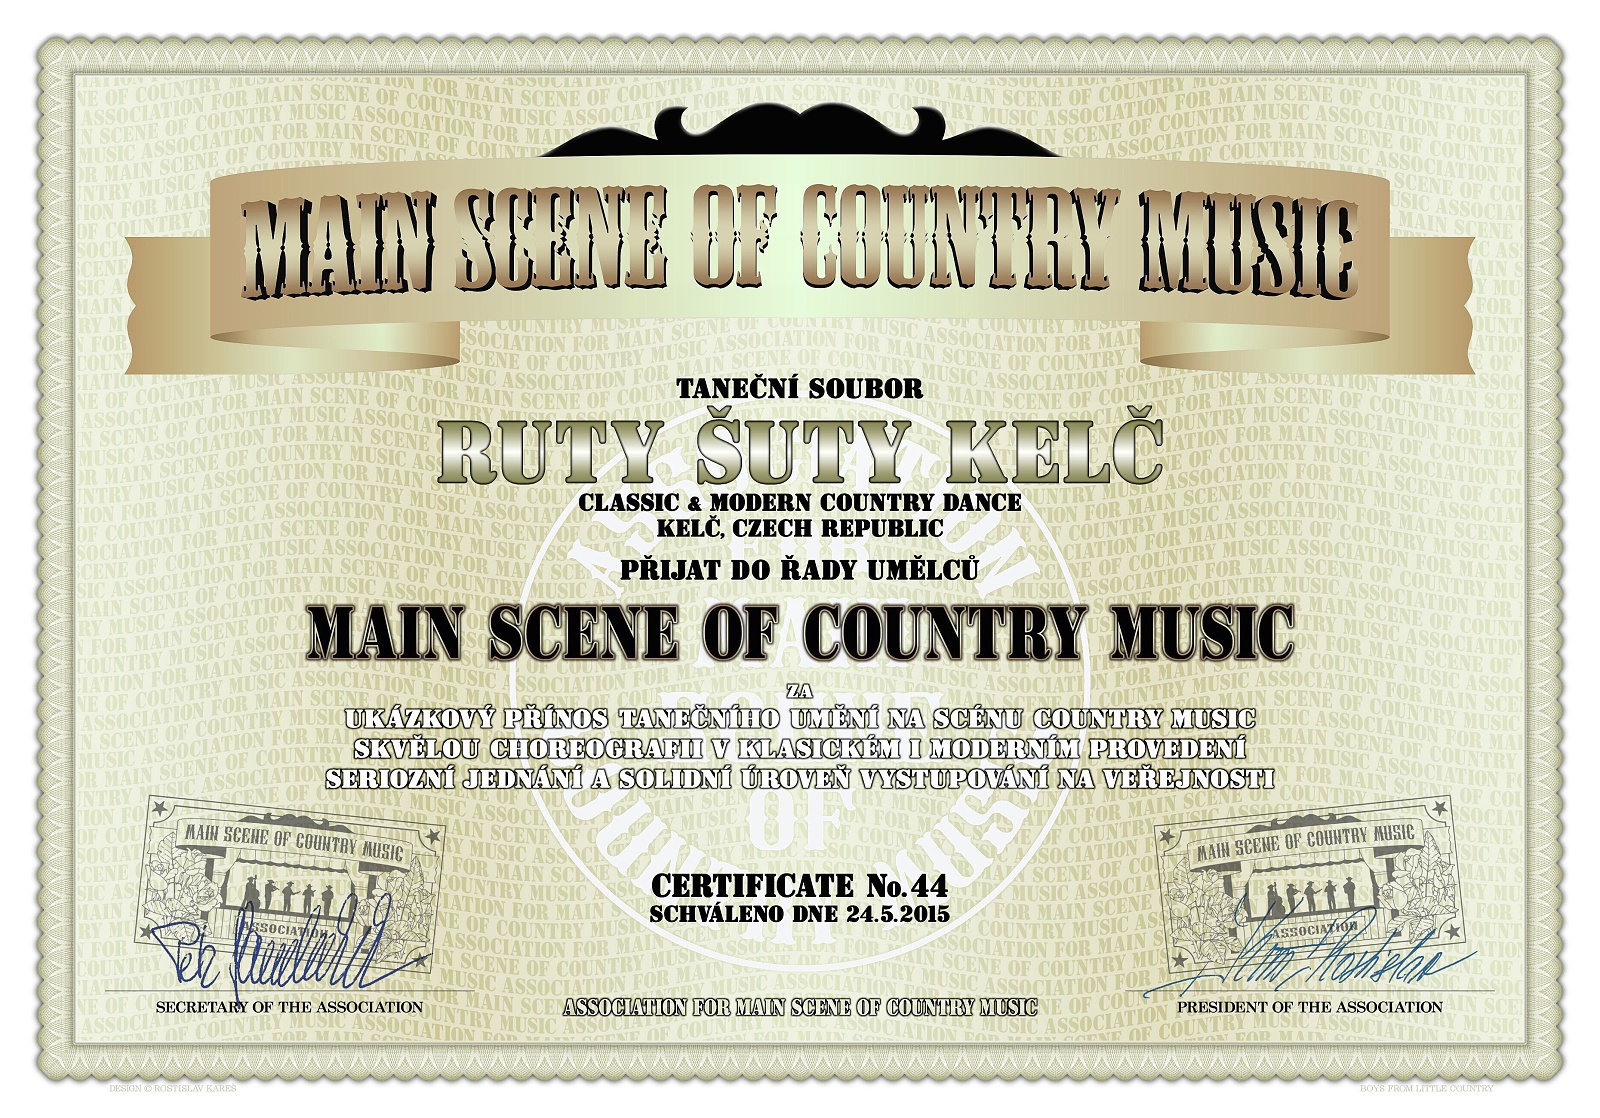 CE 44 - Main Scene of Country Music